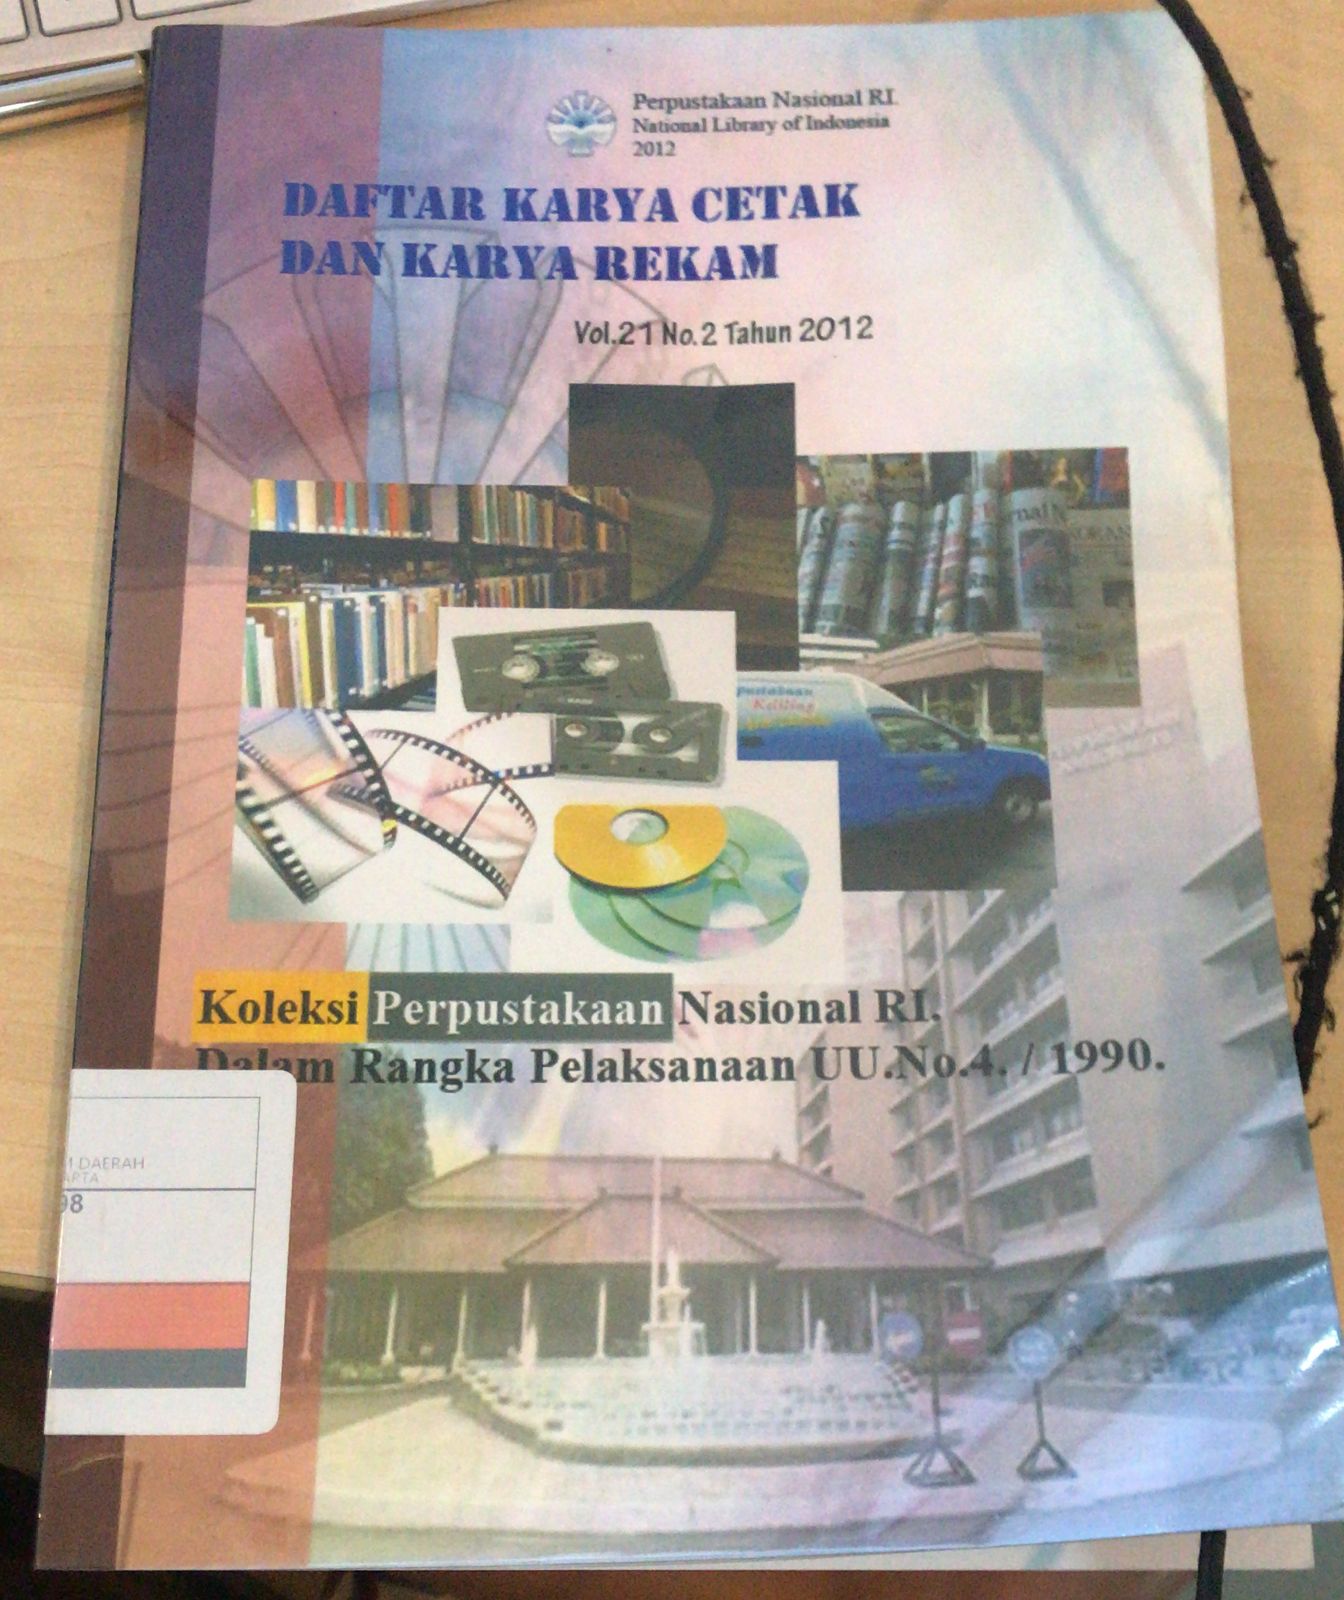 Daftar Karya Cetak dan Karya Rekam Vol 21 No. 2 Tahun 2012 :  Koleksi Perpustakaan Nasional RI Dalam Rangka Pelaksanaan UU No.4./1990